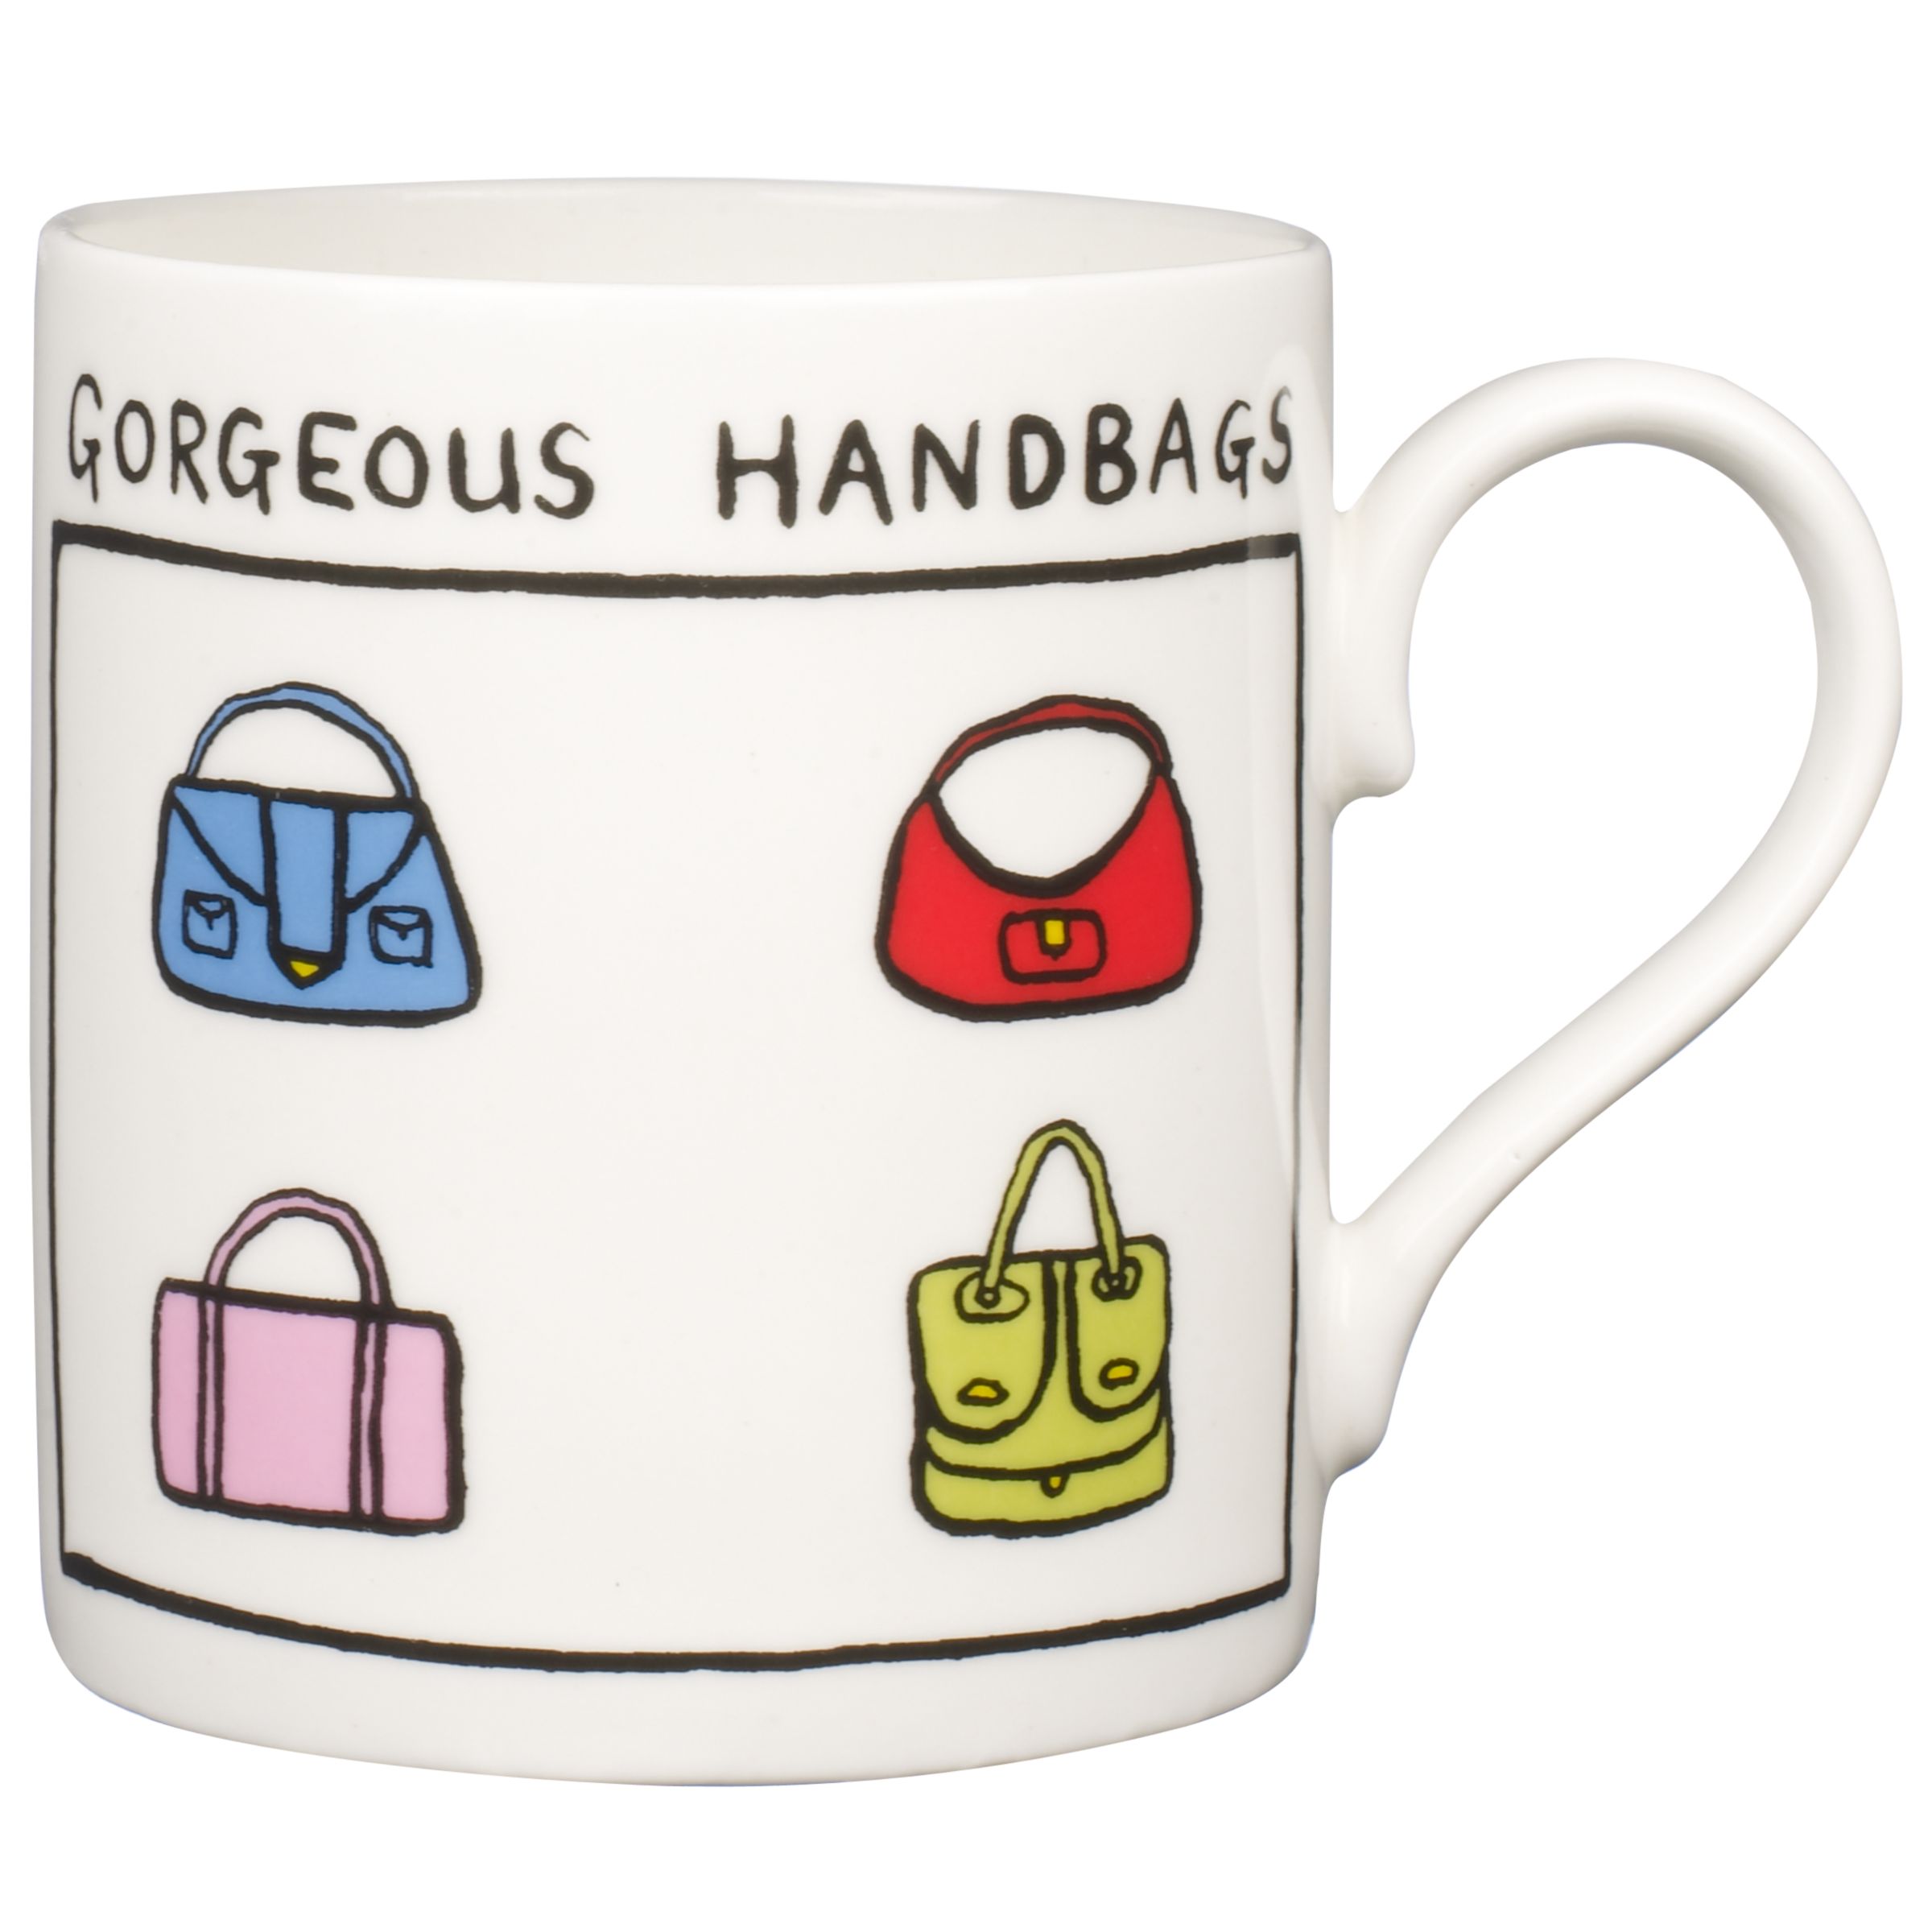 Gorgeous Handbags Mug